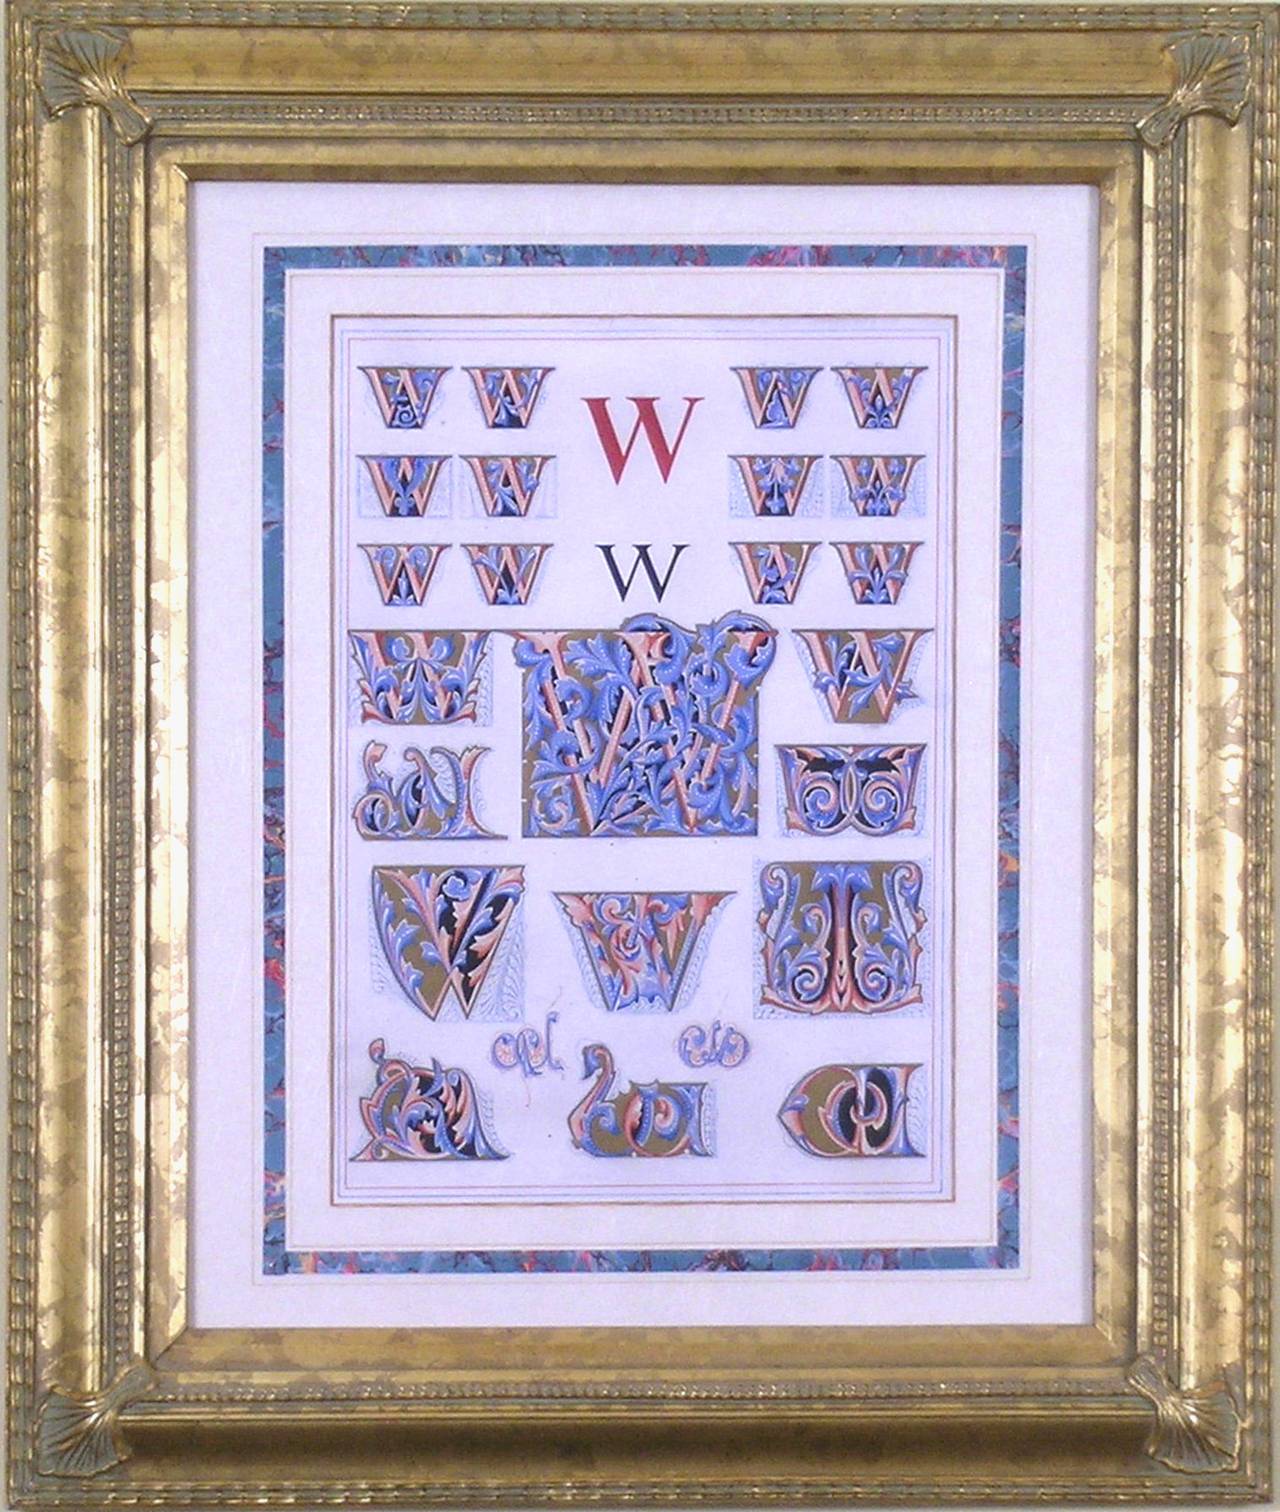  Initial Letters "W" (Alphabet) - Print by Owen Jones